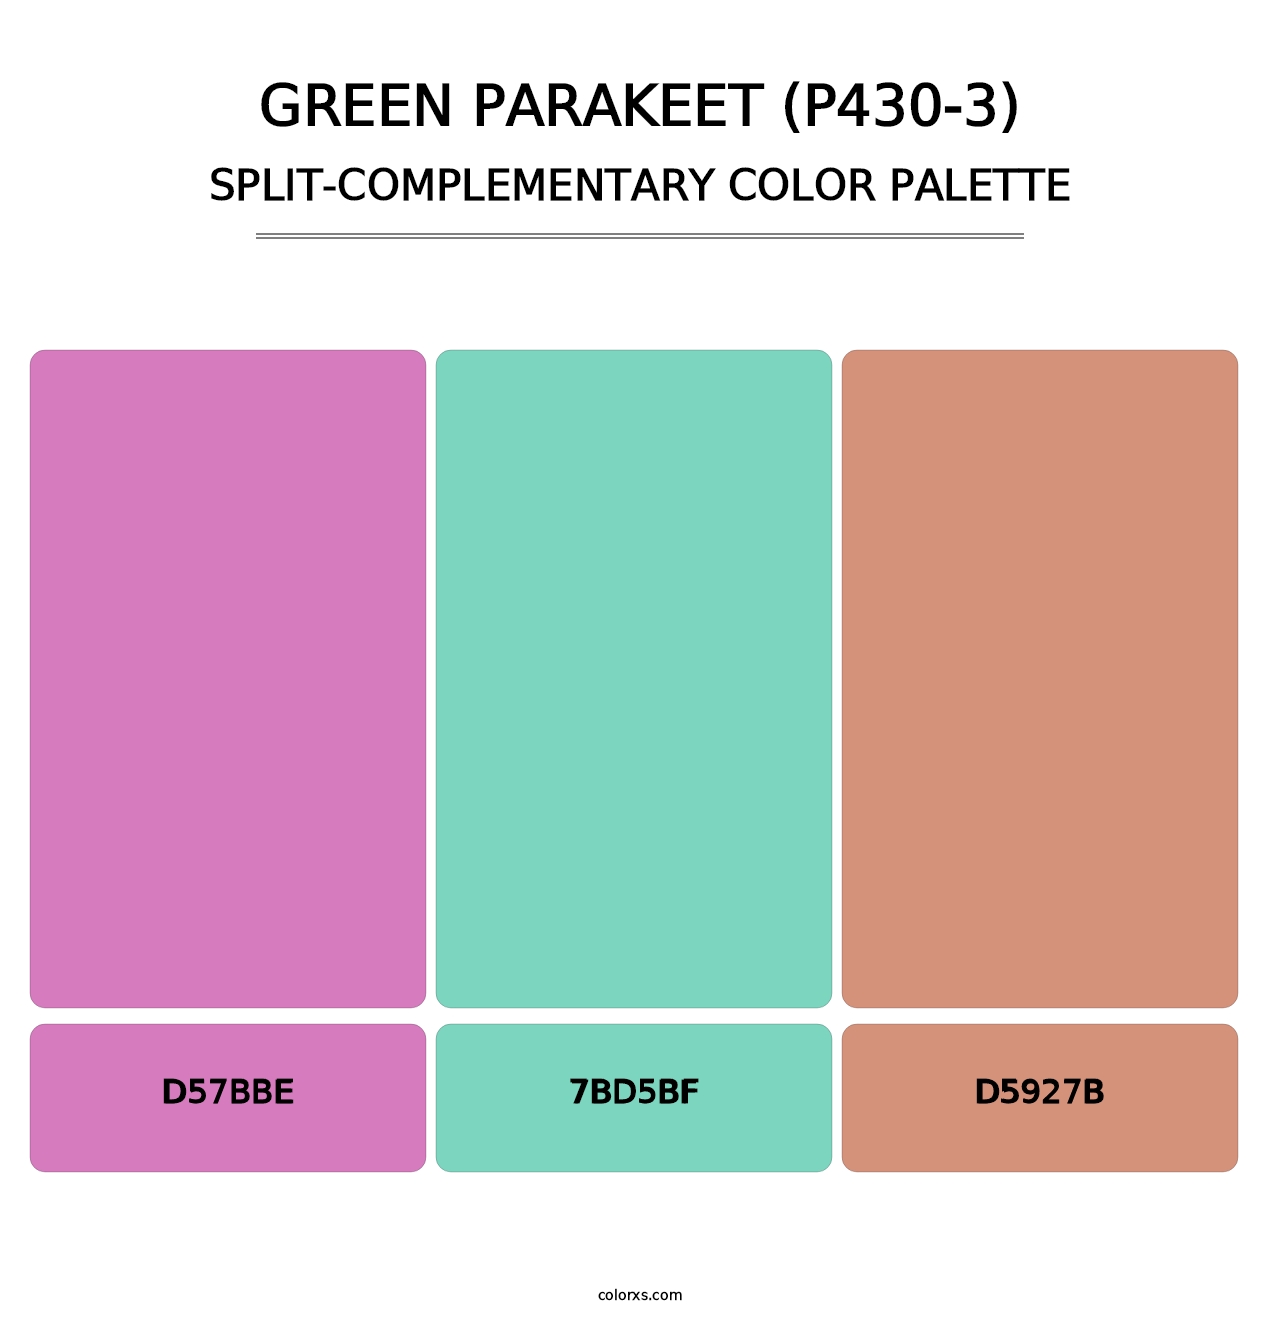 Green Parakeet (P430-3) - Split-Complementary Color Palette